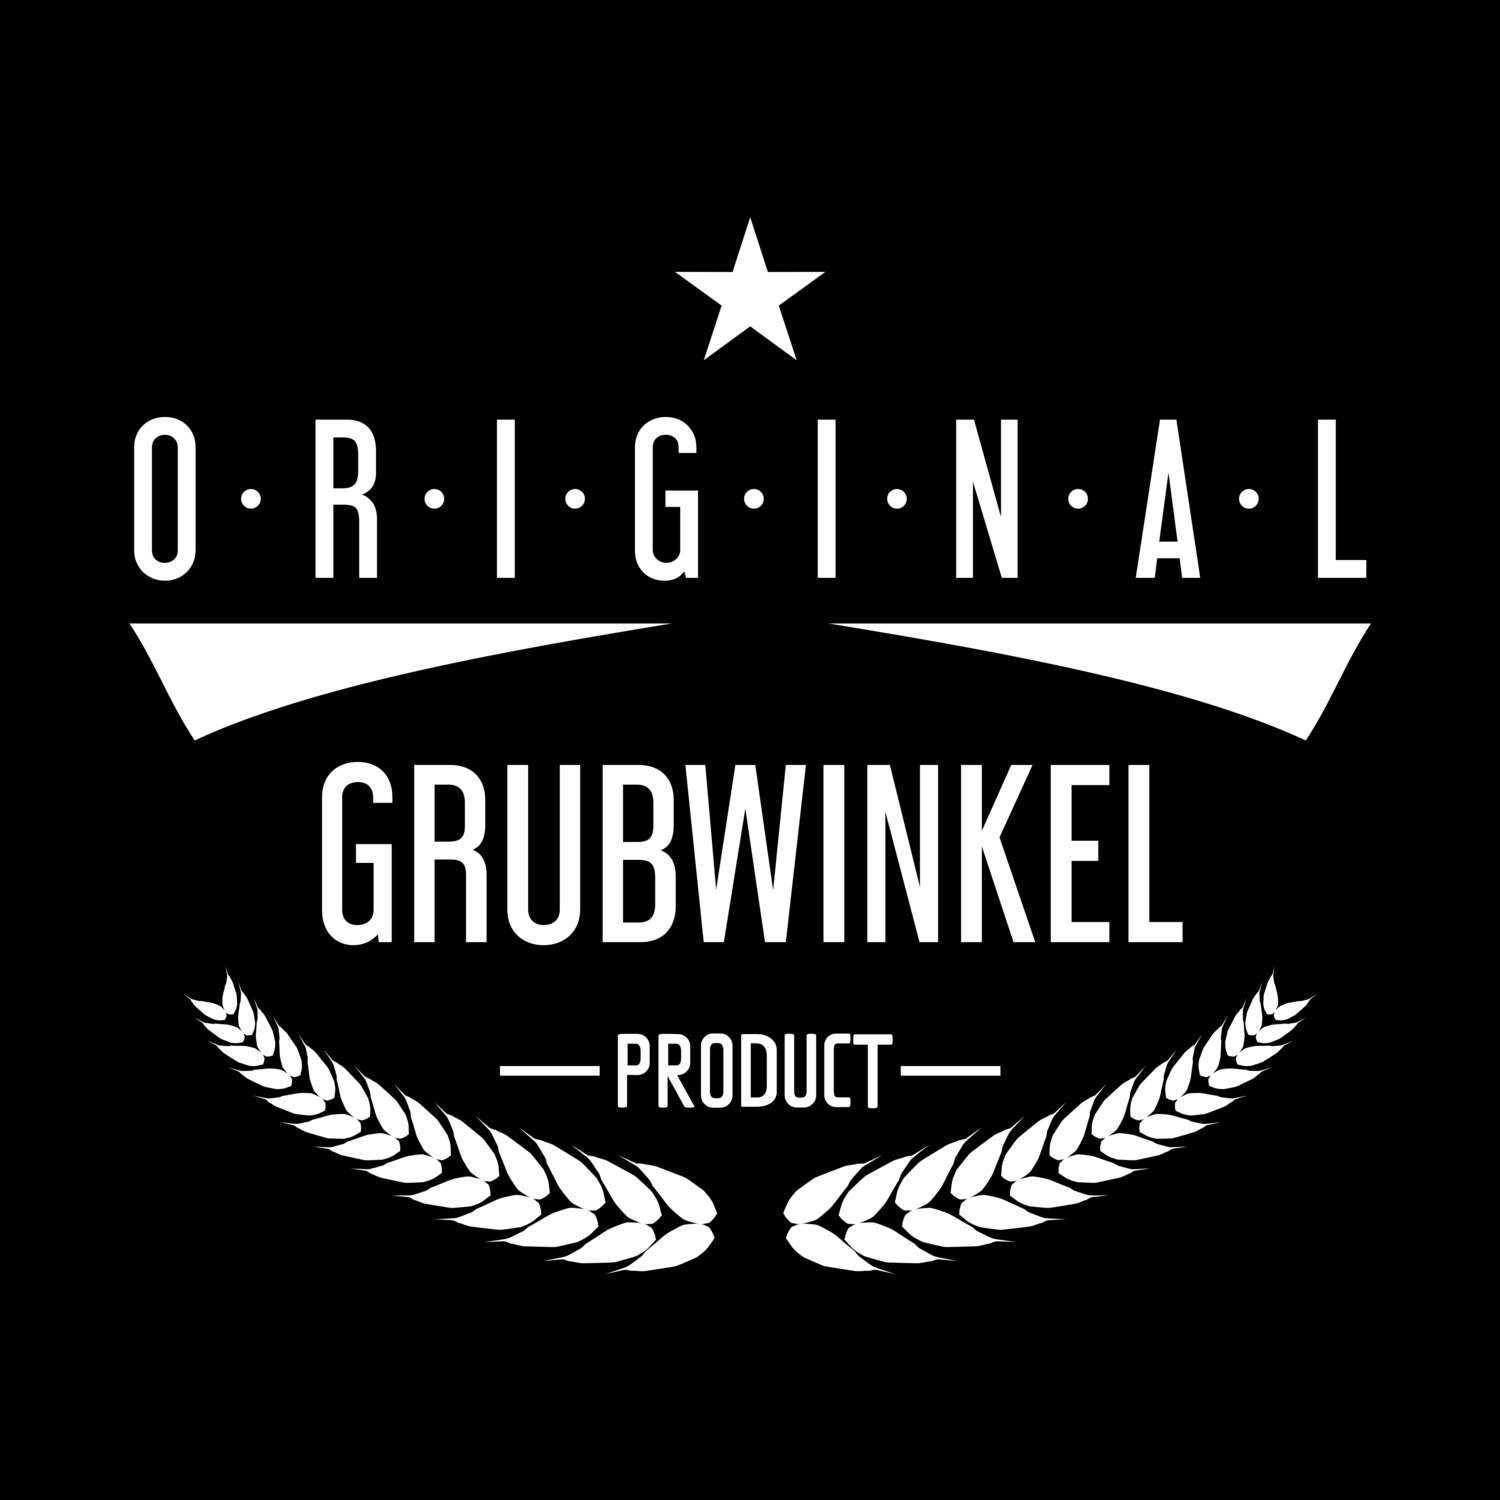 Grubwinkel T-Shirt »Original Product«